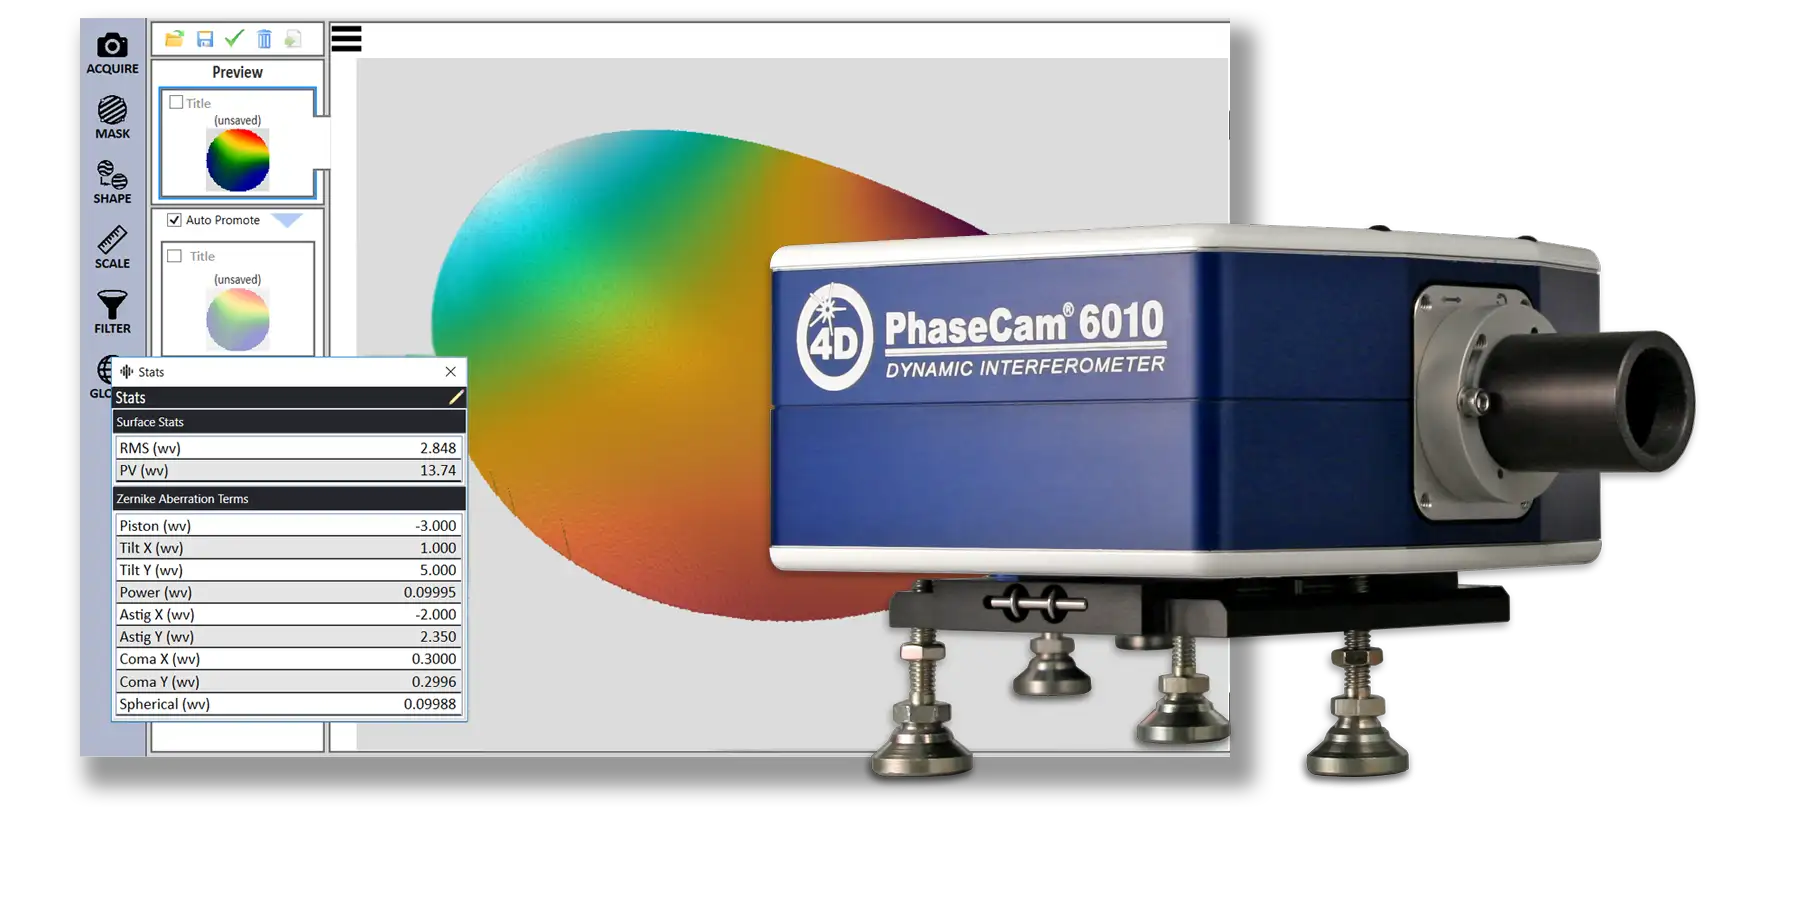 Laser Interferometer - 4D Technology PhaseCam 6010 Compact Twyman-Green Laser Interferometer